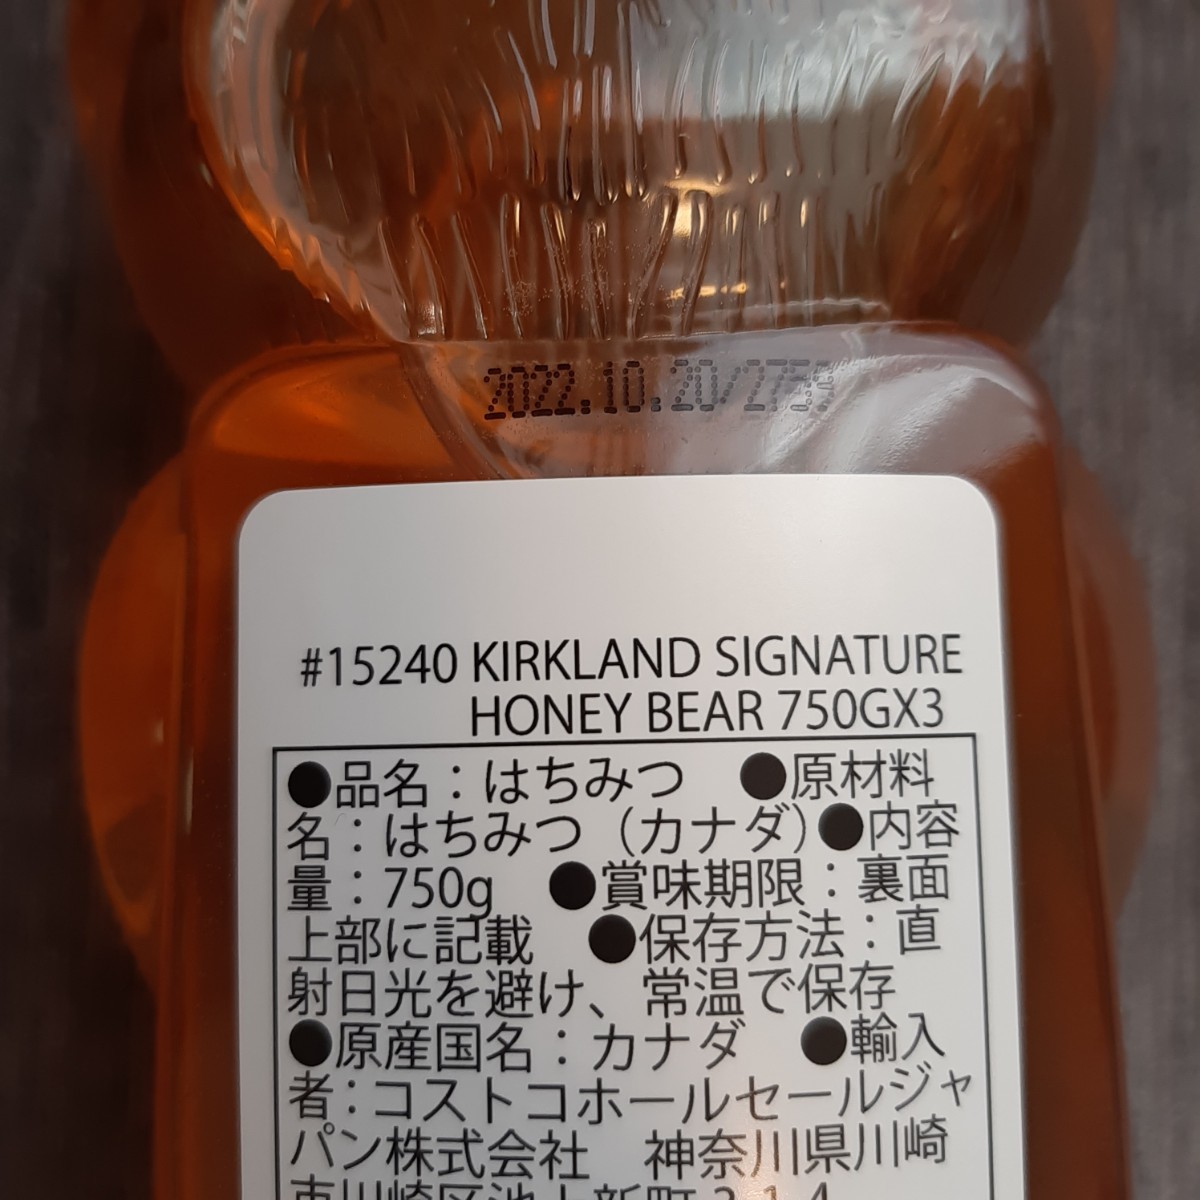 Paypayフリマ 匿名配送 蜂蜜 ハチミツ はちみつ 2本セット コストコ カークランド 容器 可愛い オシャレ カナダ産 Kirkland